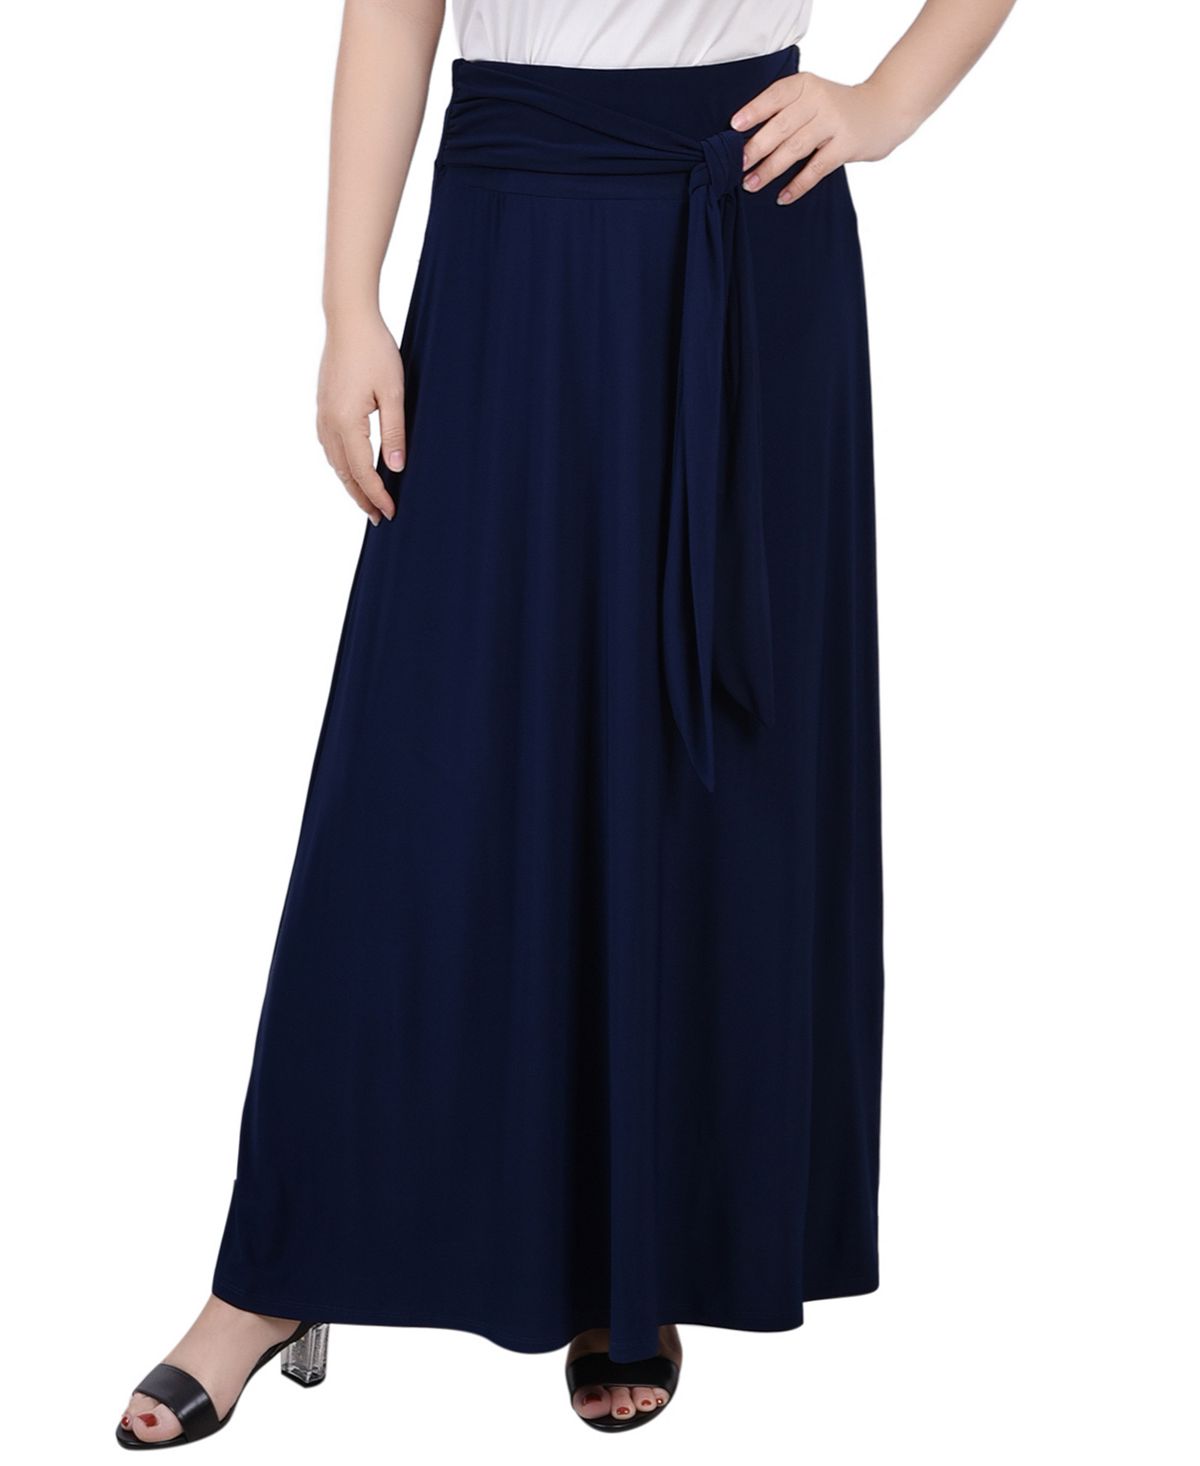 юбка fashion collection агриппа Женская макси-юбка missy с поясом на талии NY Collection